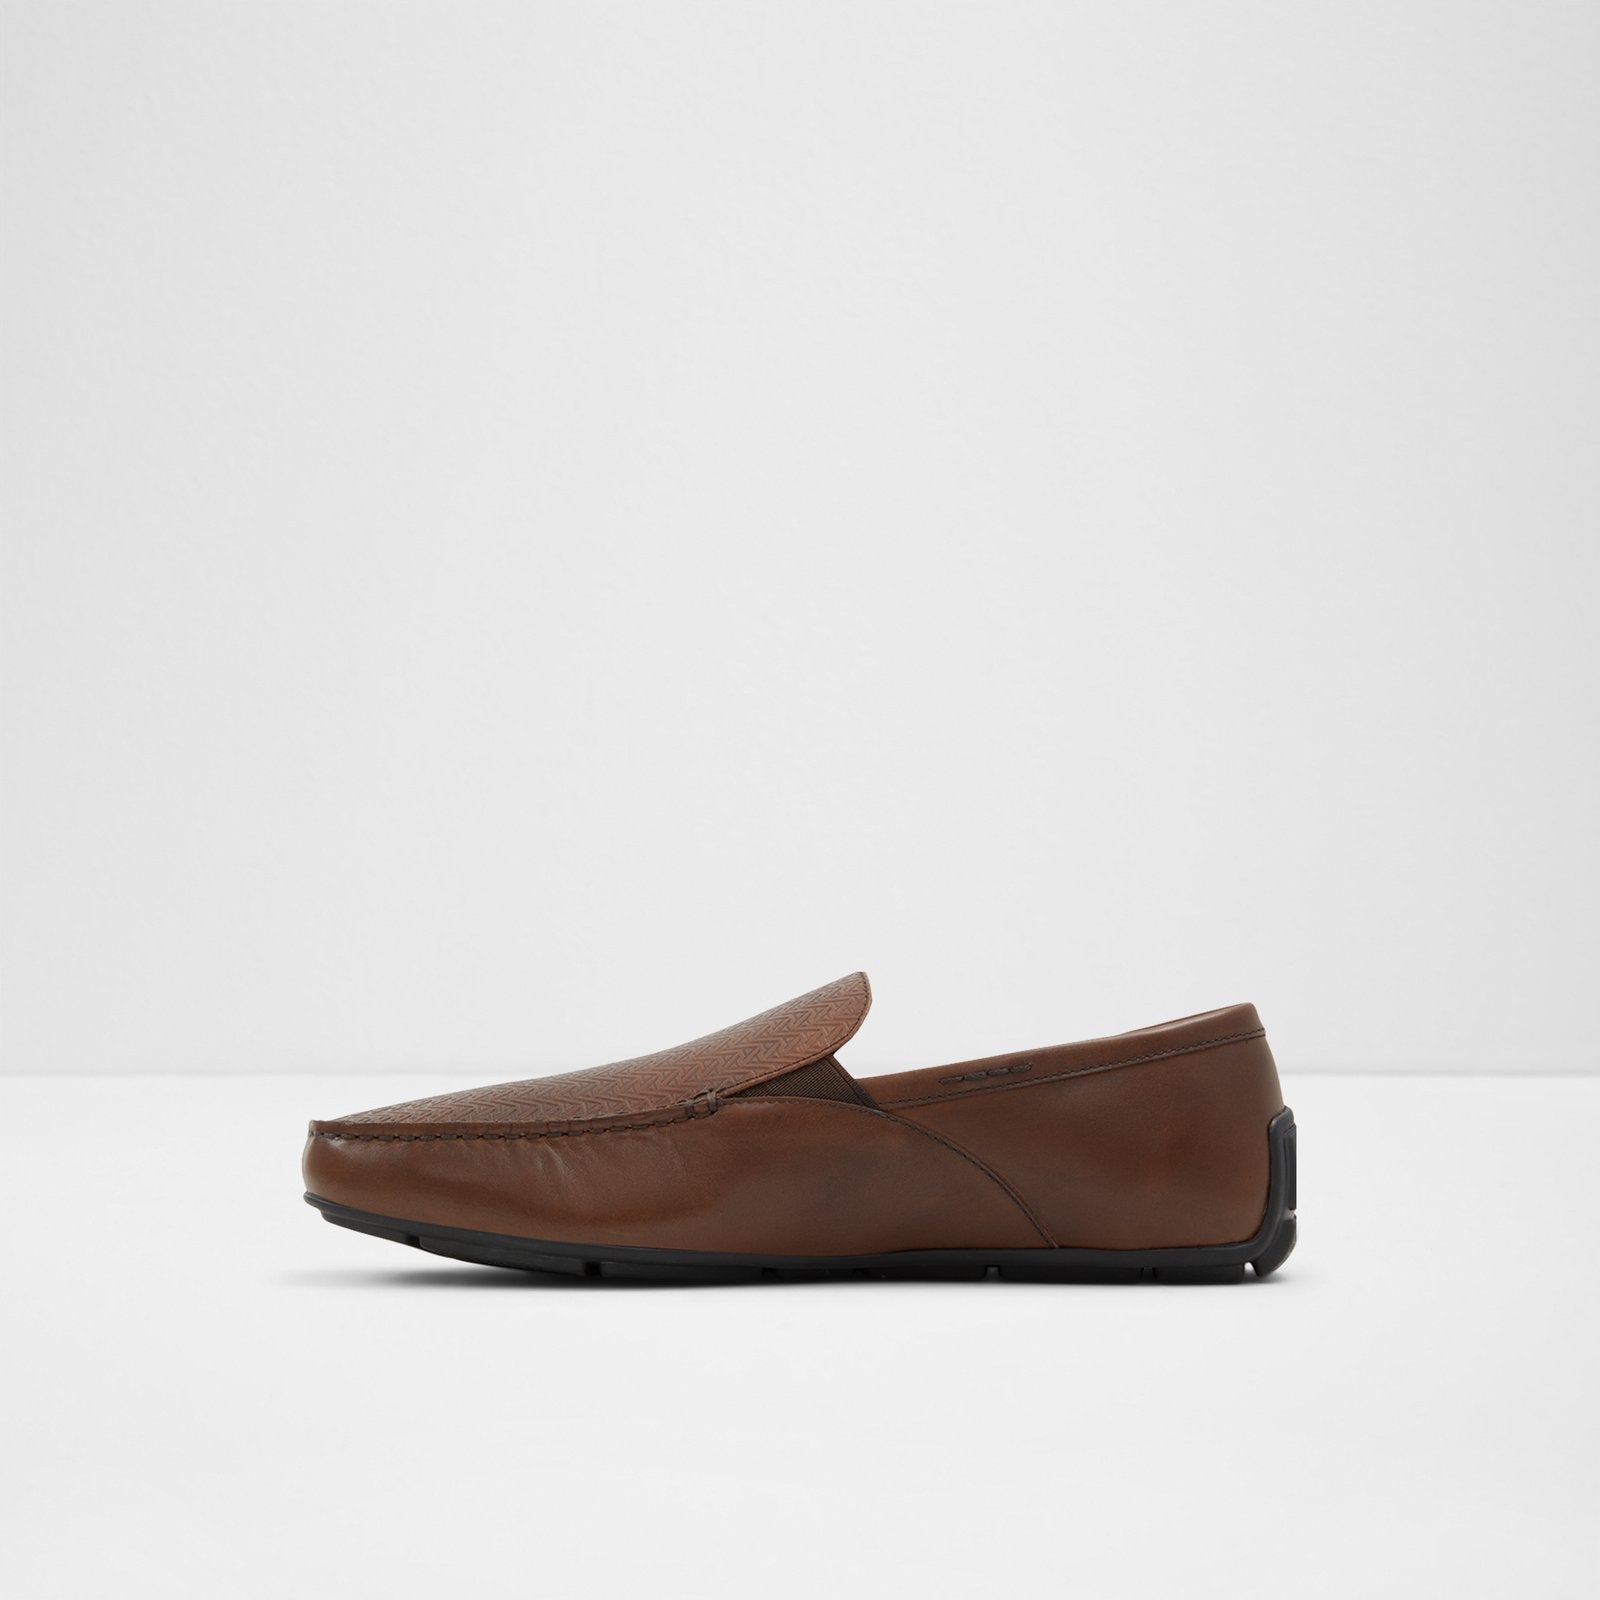 Leibelt Men Shoes - Dark Brown - ALDO KSA